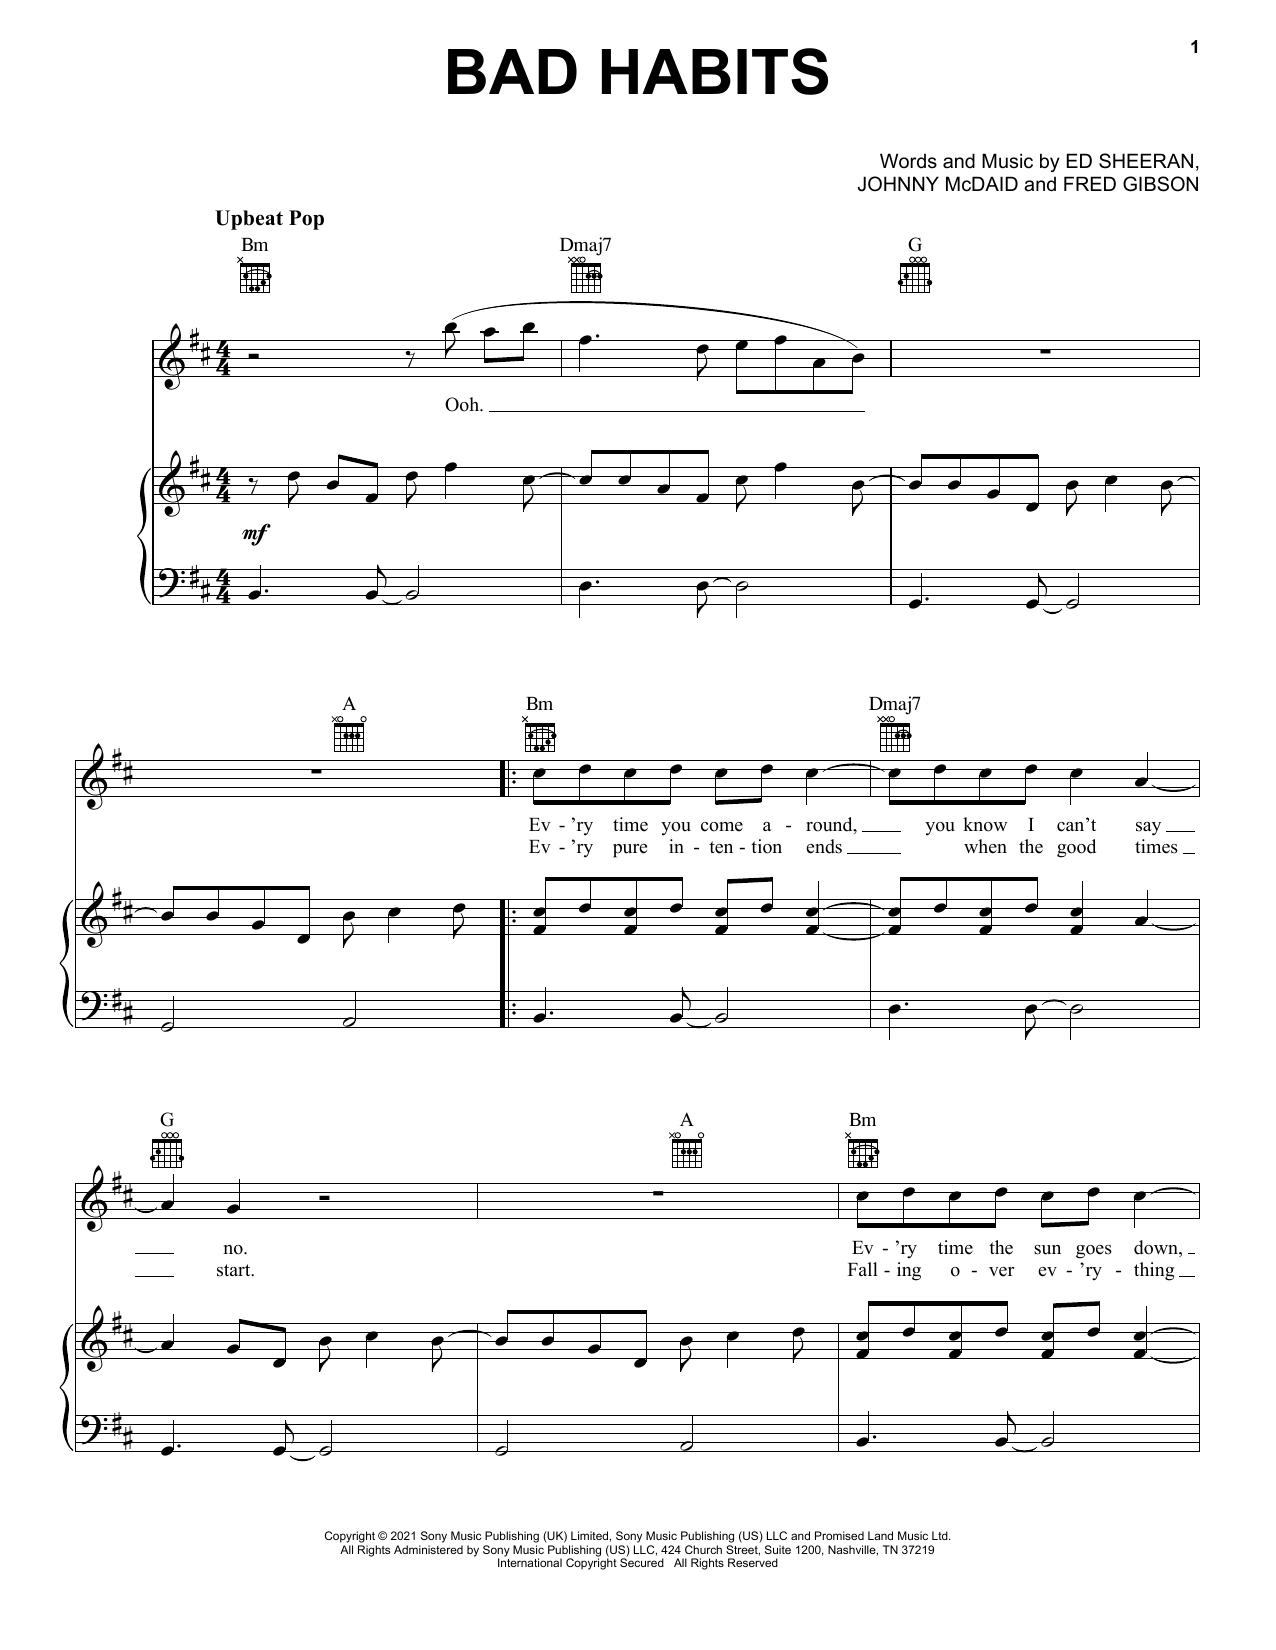 Ed Sheeran Bad Habits Sheet Music Notes & Chords for Instrumental Solo – Treble Clef High Range - Download or Print PDF